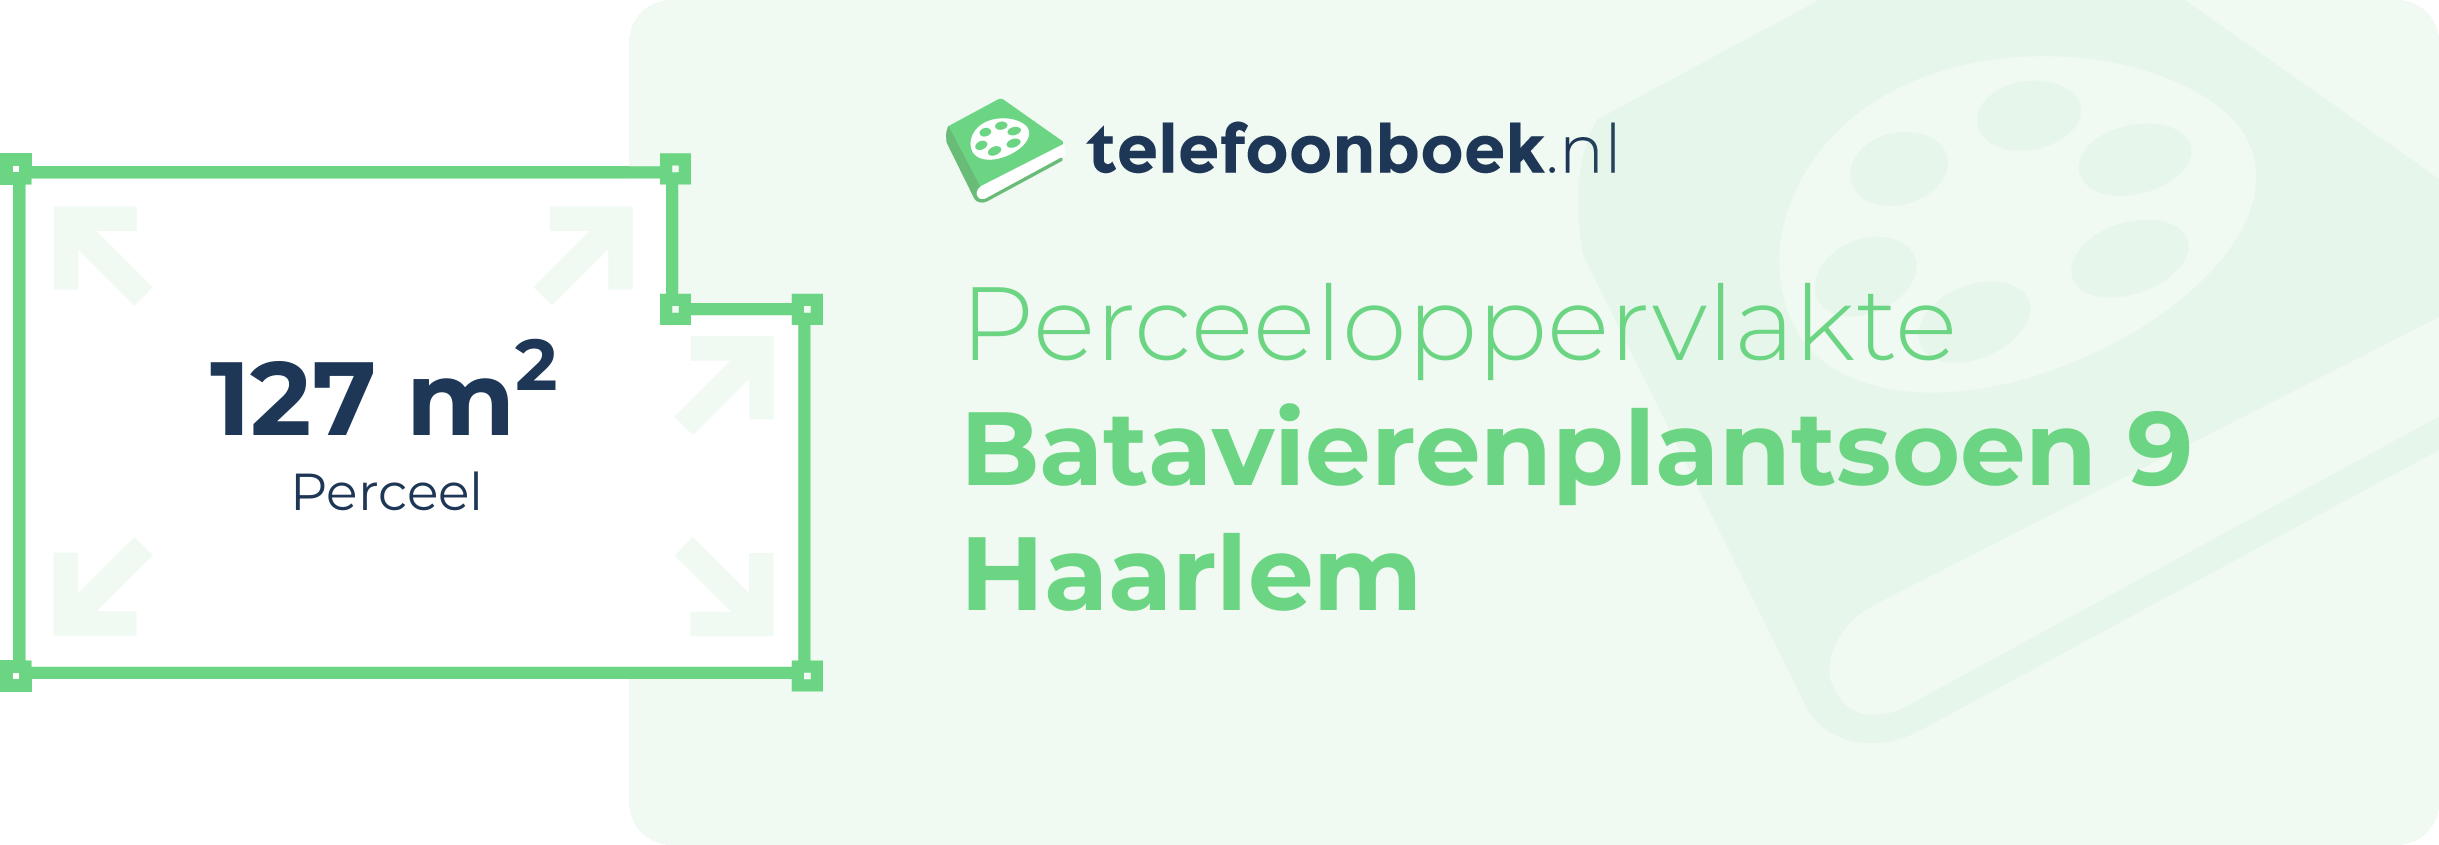 Perceeloppervlakte Batavierenplantsoen 9 Haarlem